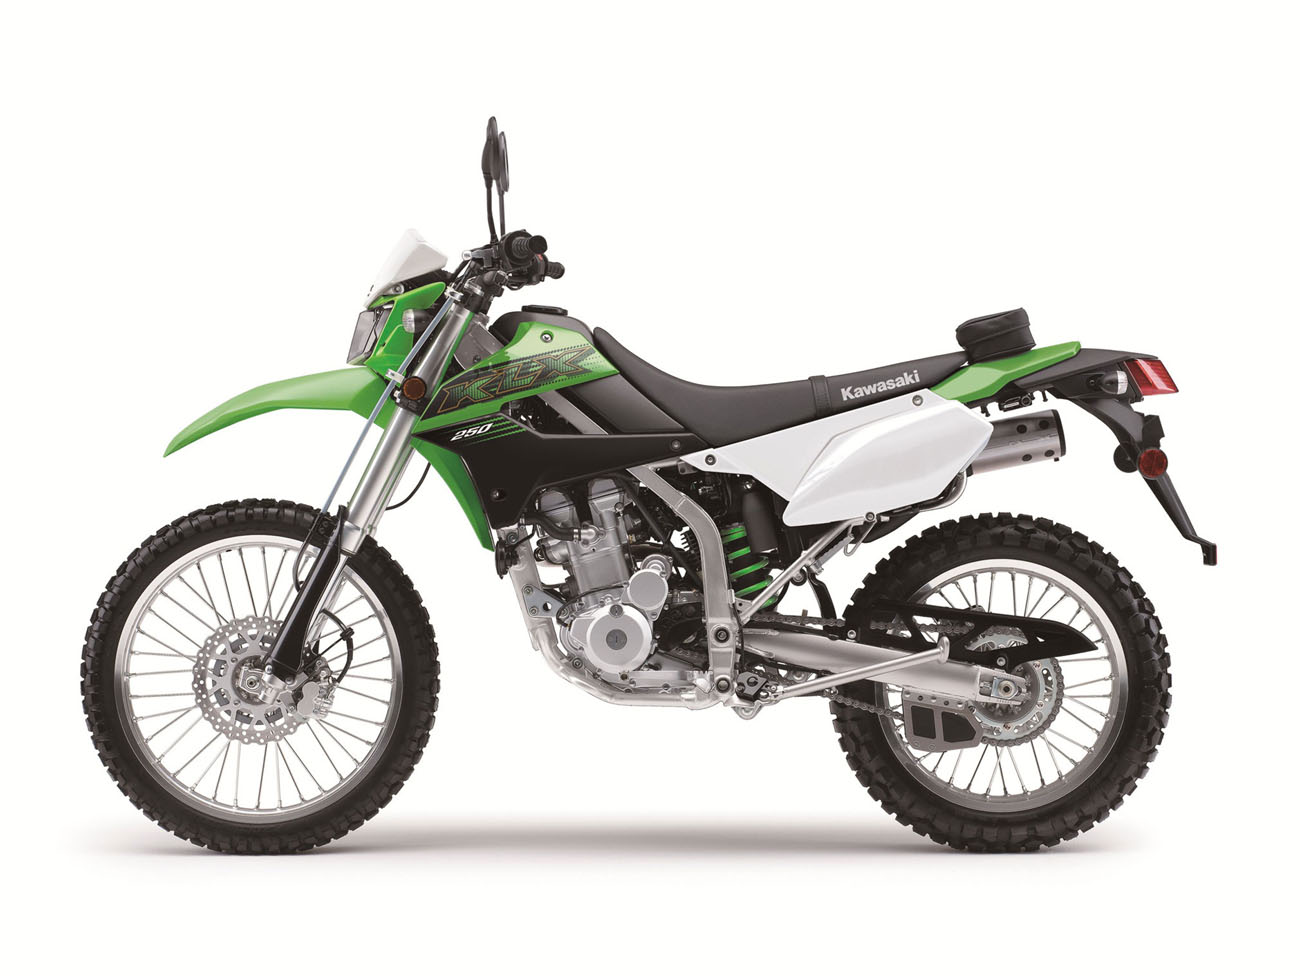 Kawasaki KLX 250 technical specifications